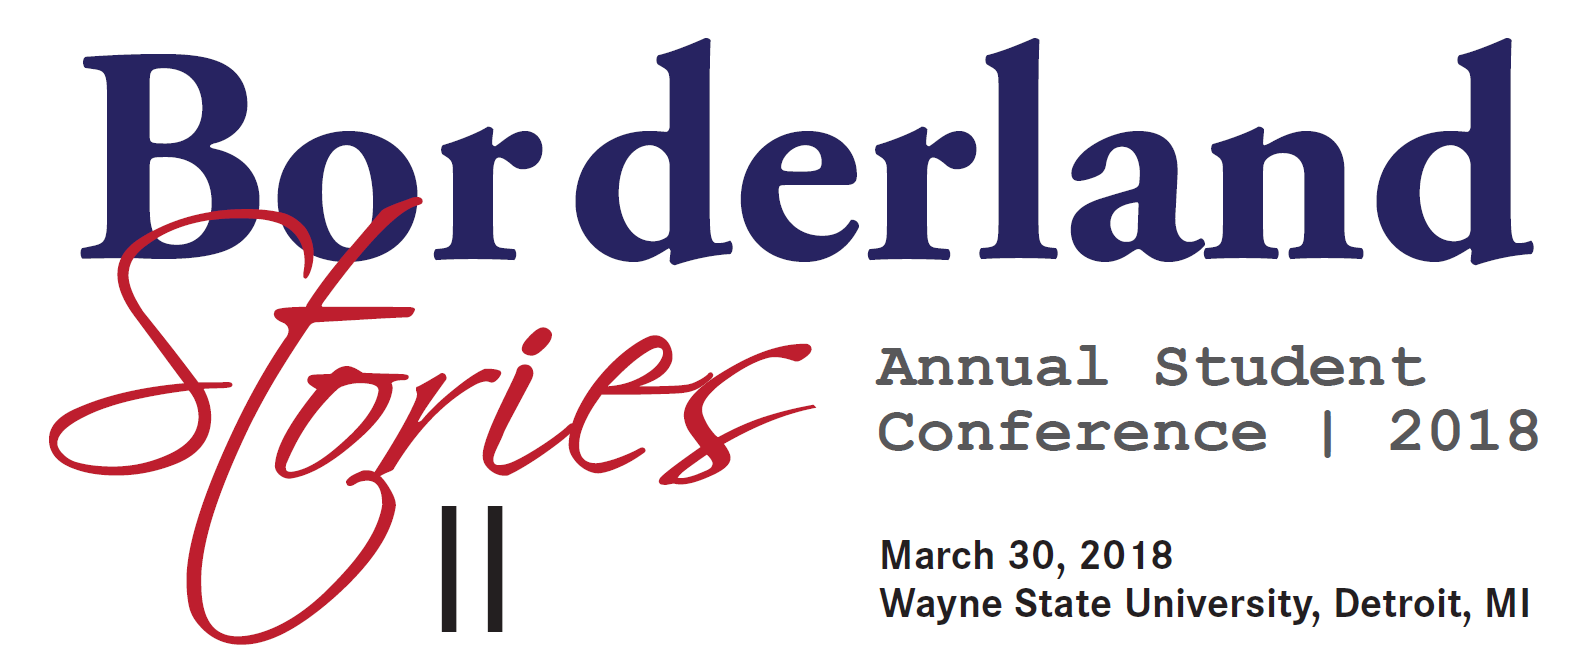 Borderland Stories Conference 2018